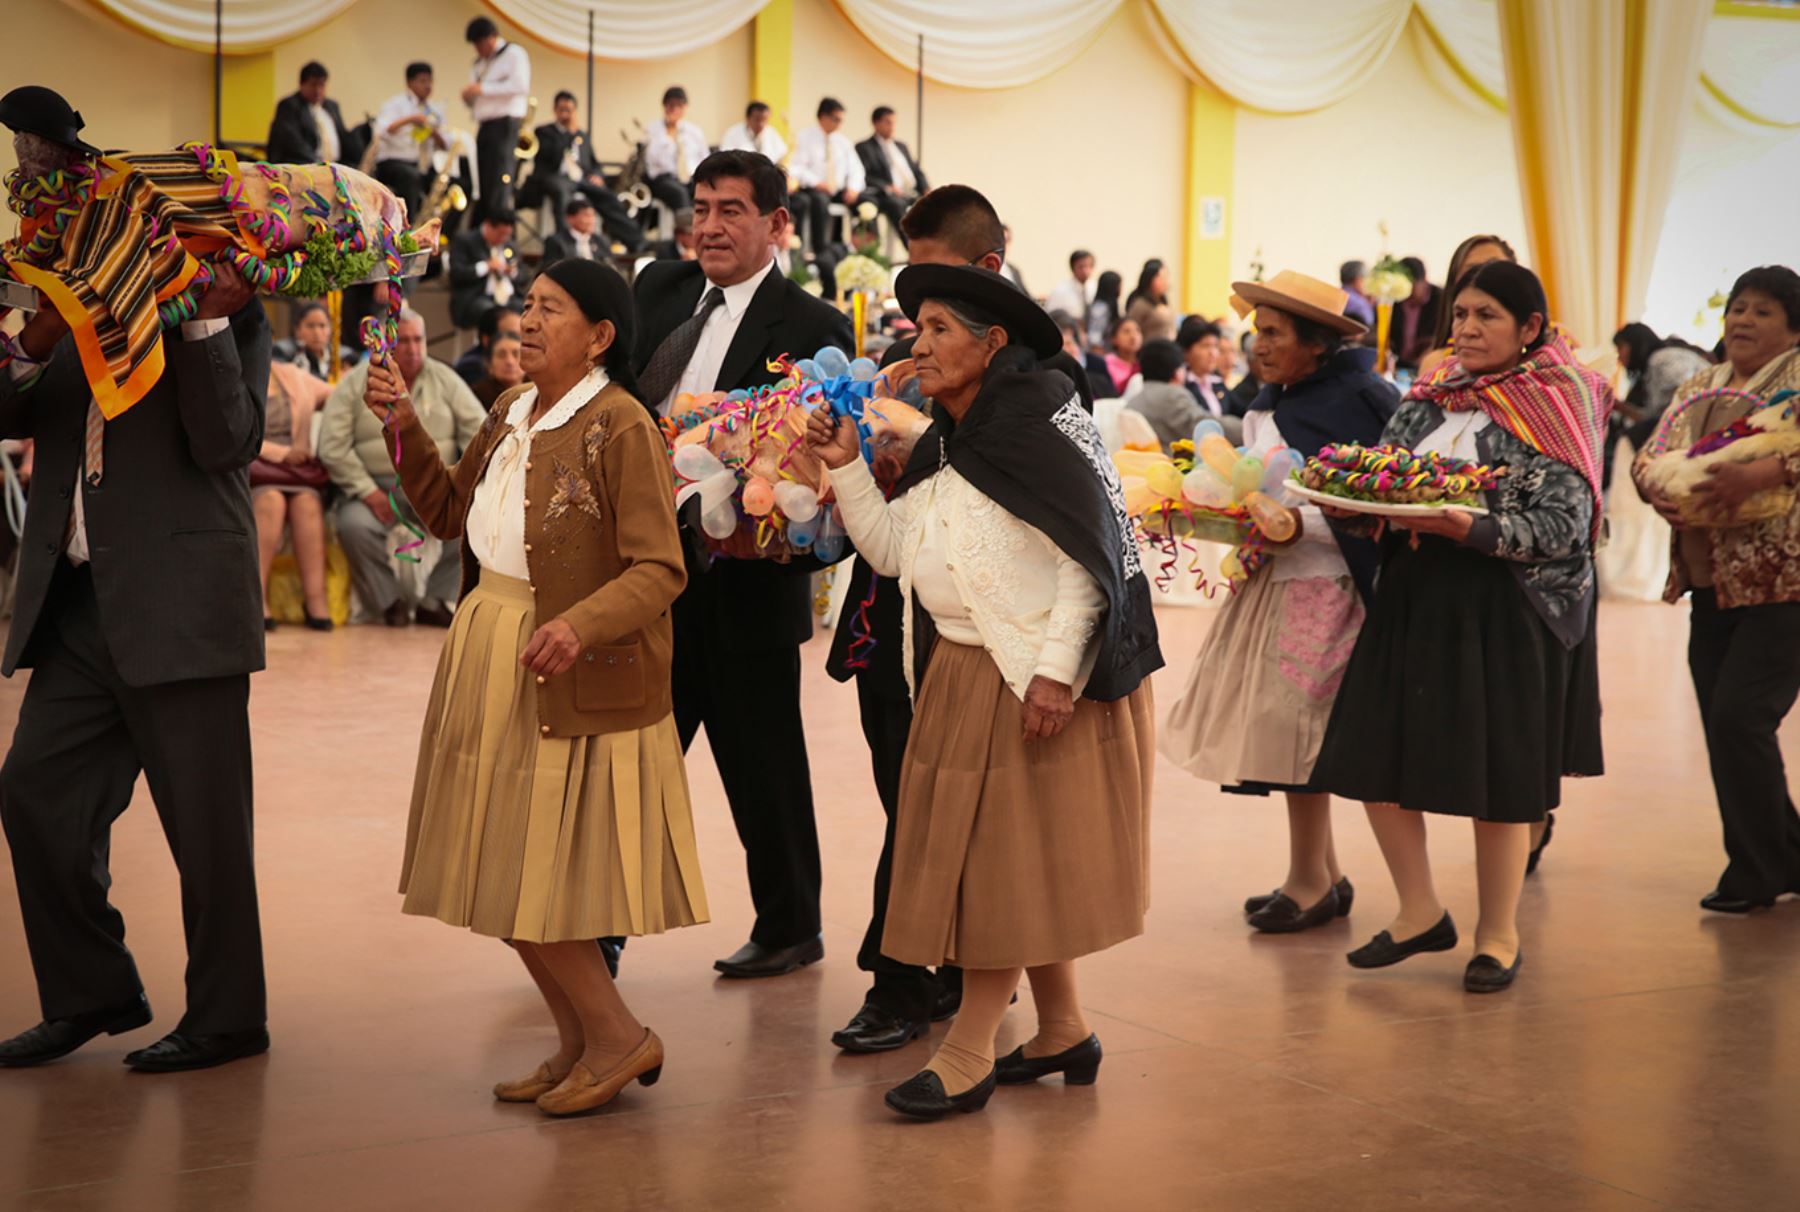 Palpa Matrimonio en Huancayo